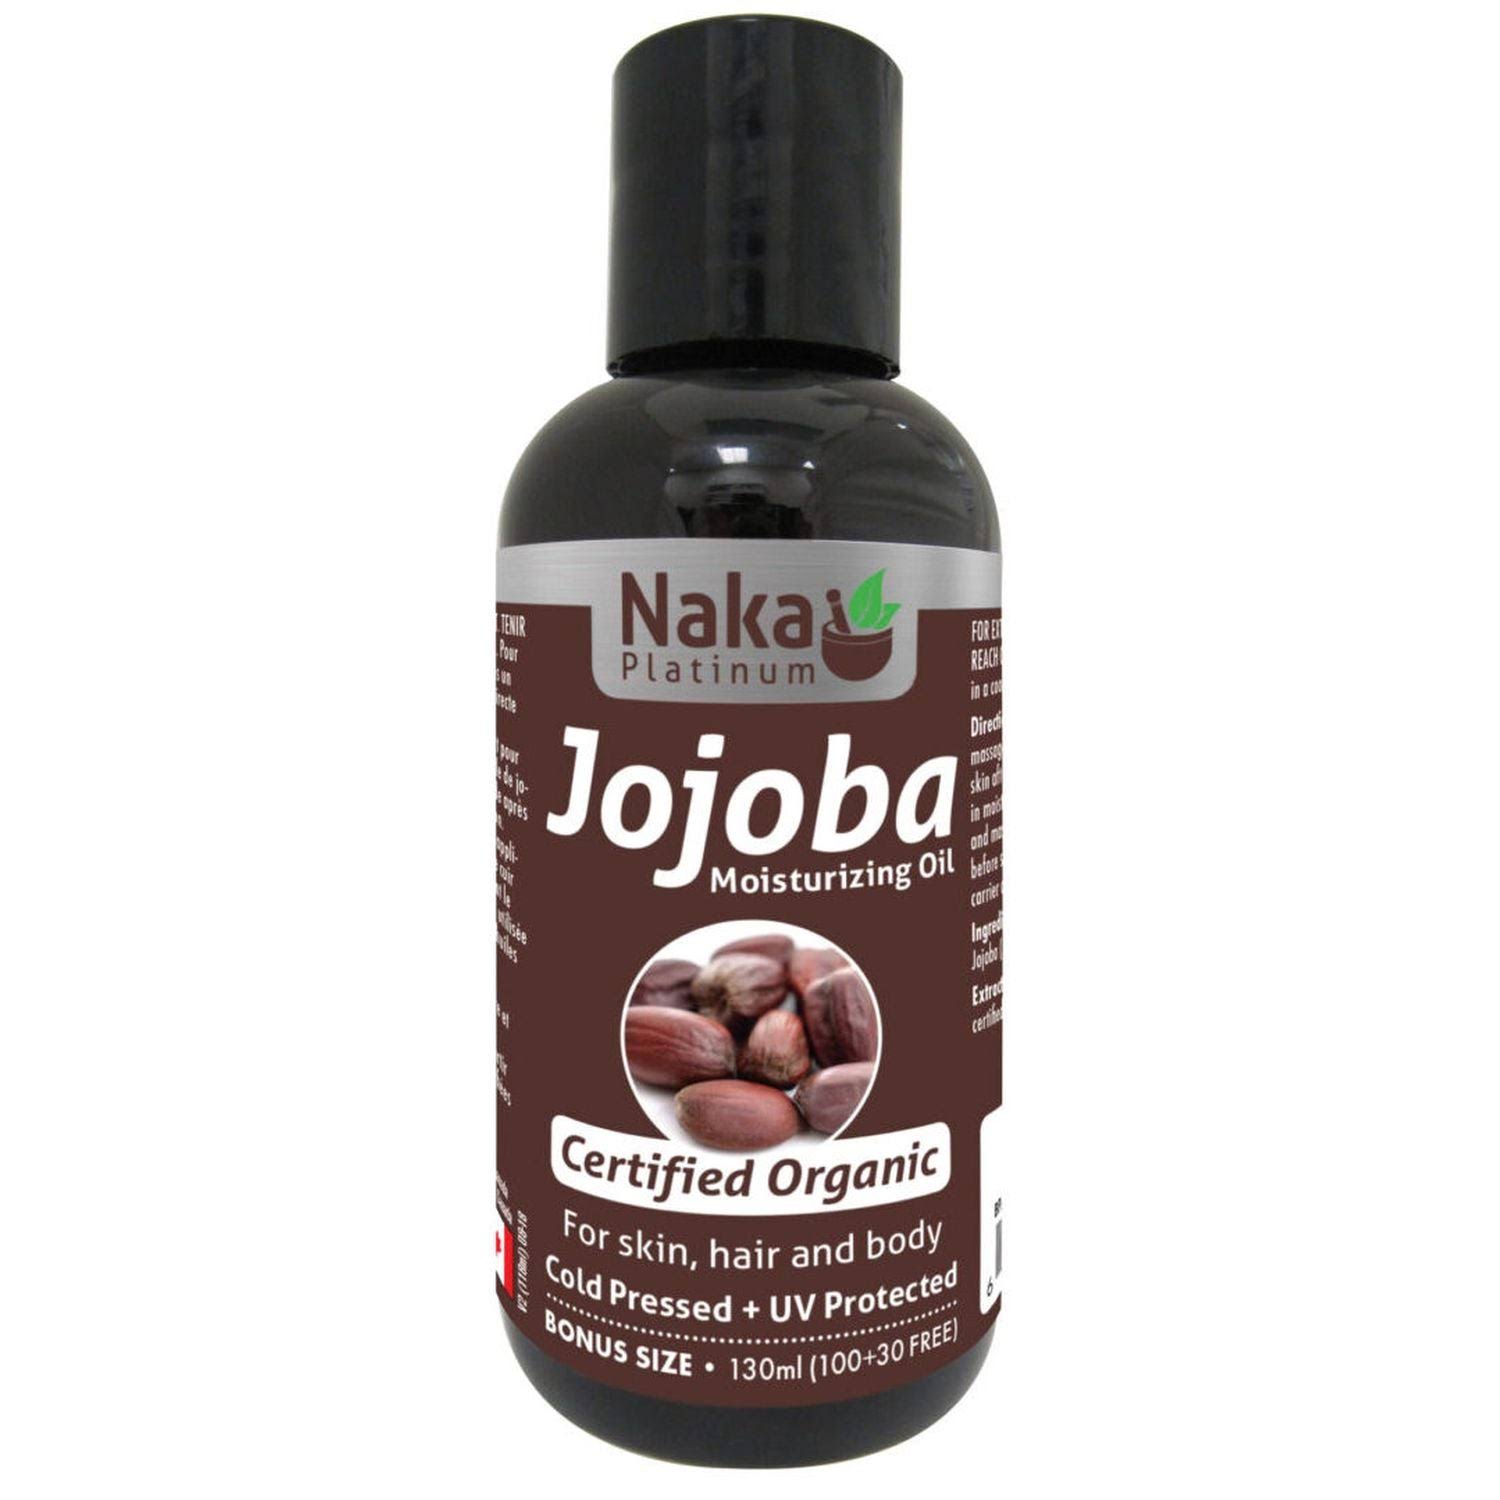 100% Pure Jojoba Moisturizing Oil - 100ml + 30ml Bonus